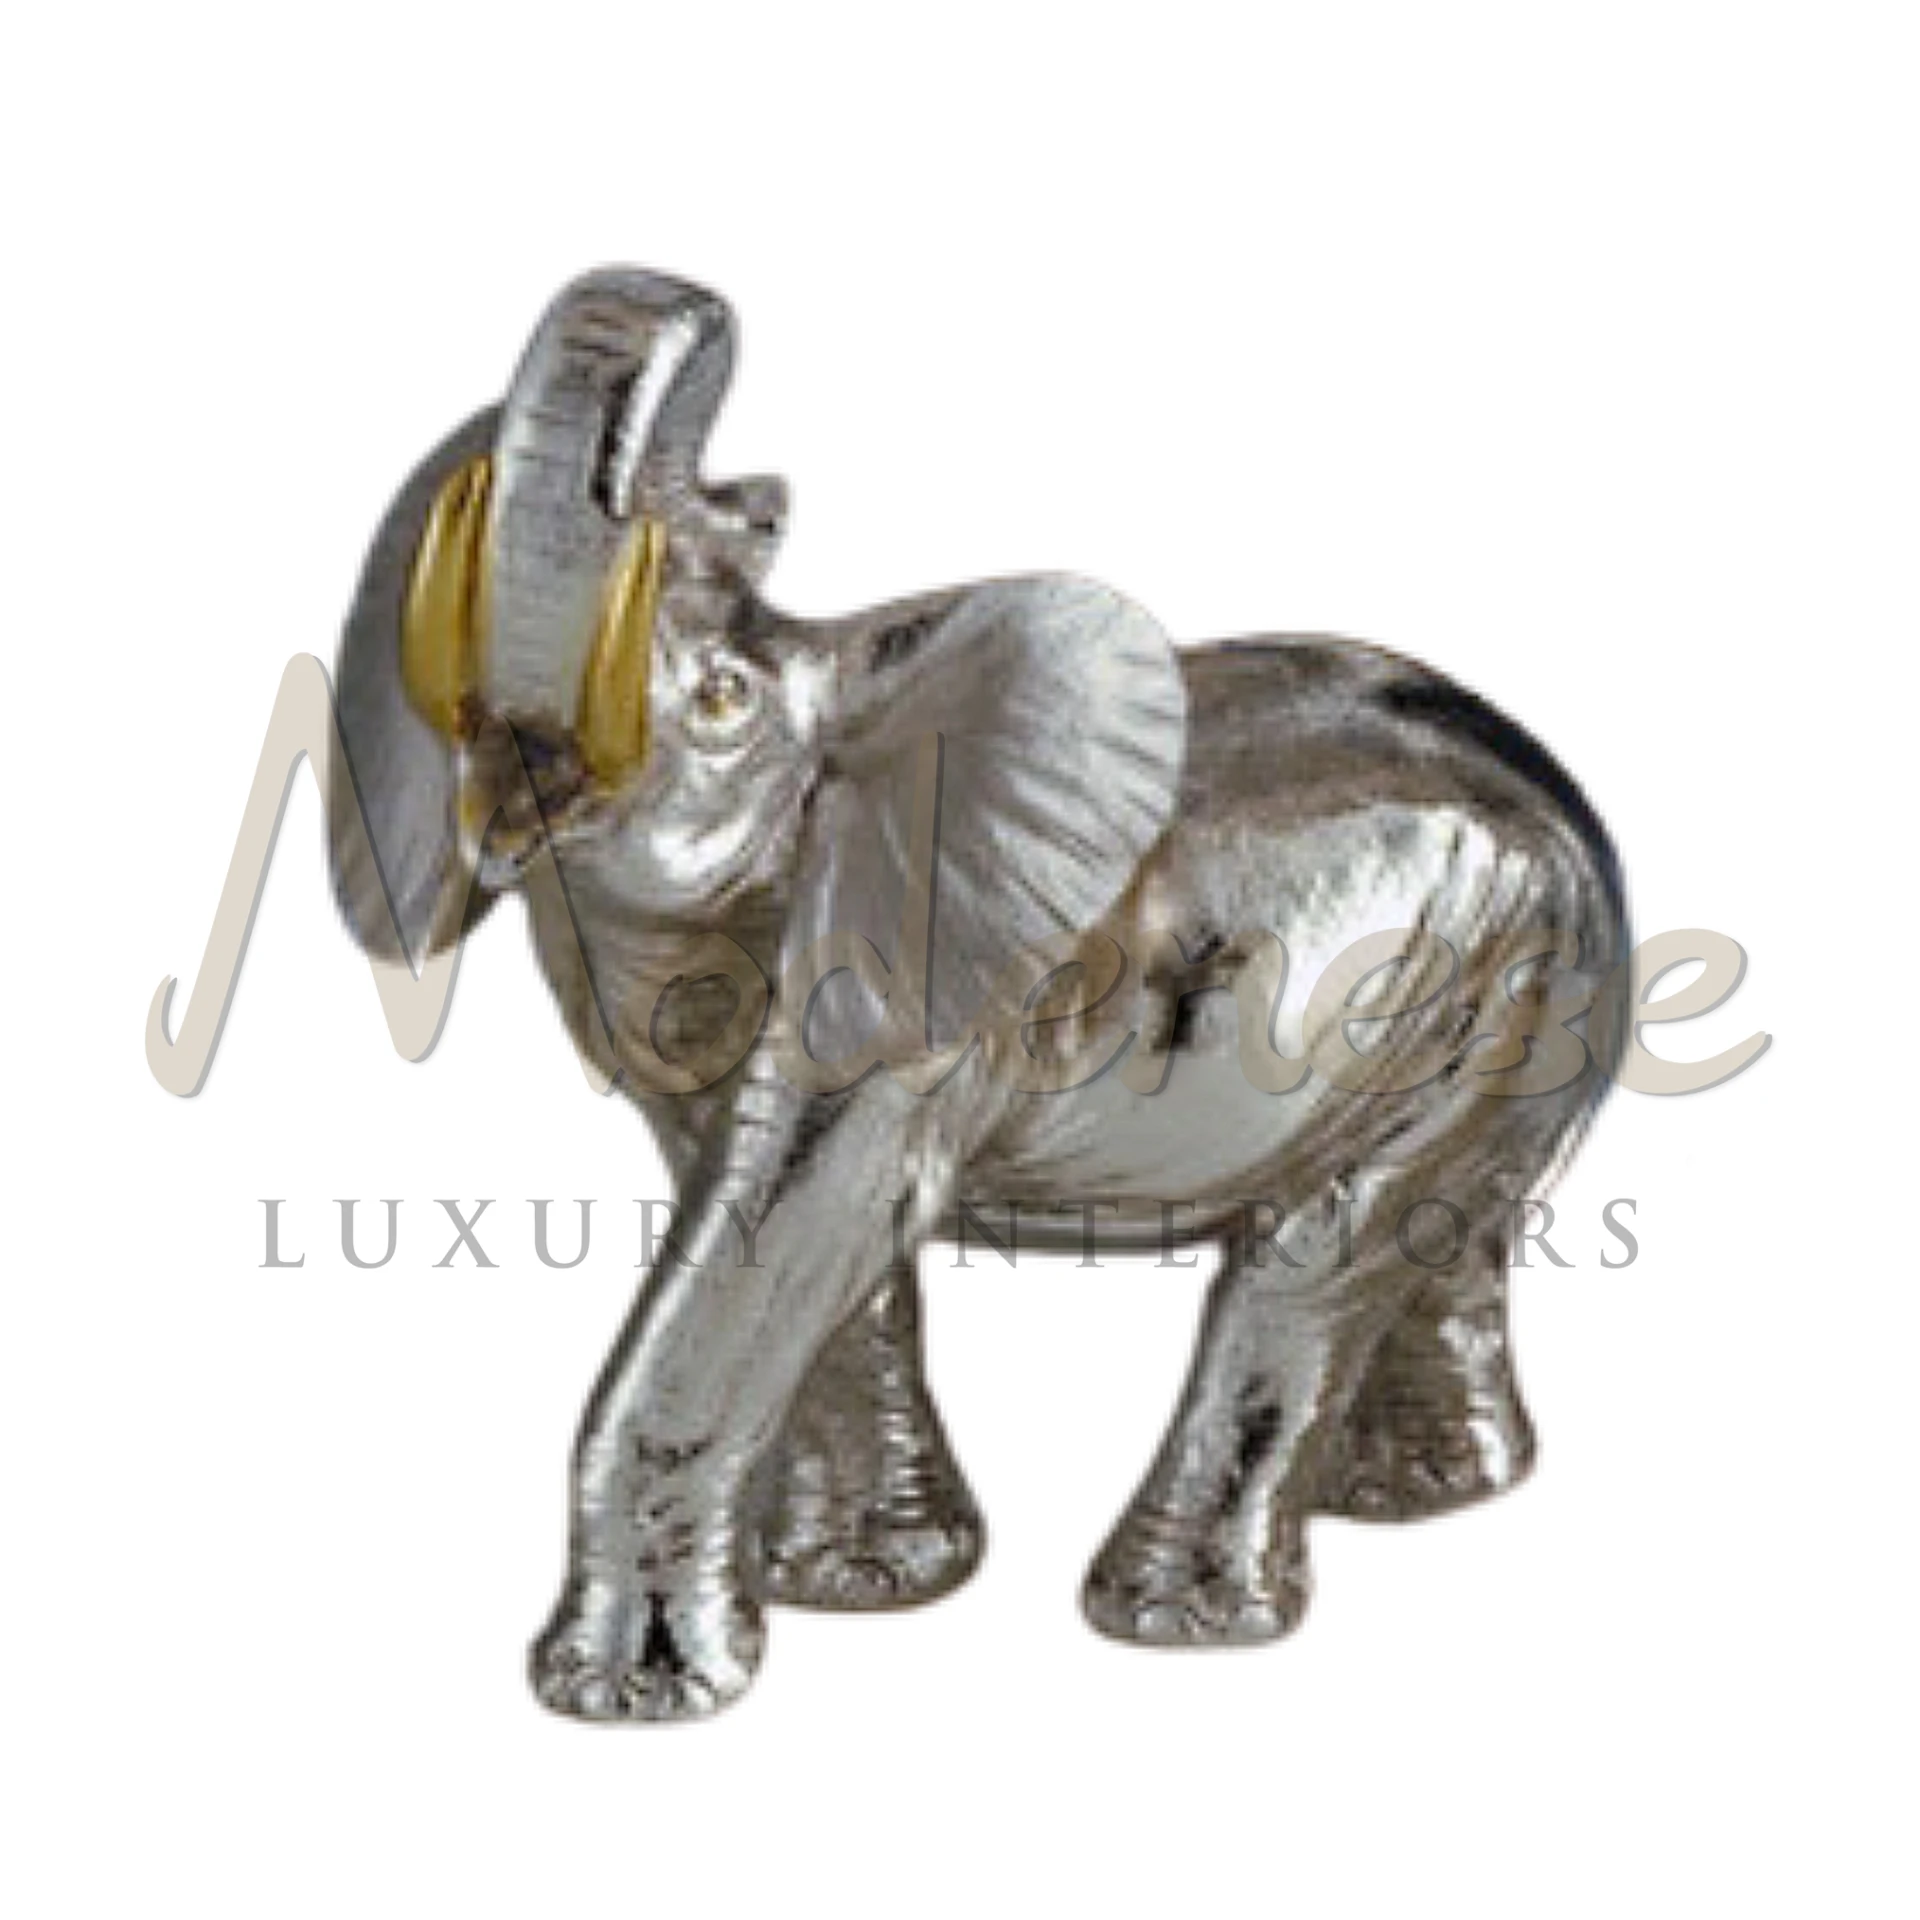 Elegant Silver Elephant statue, a masterpiece of craftsmanship, adding grace and elegance to any decor.